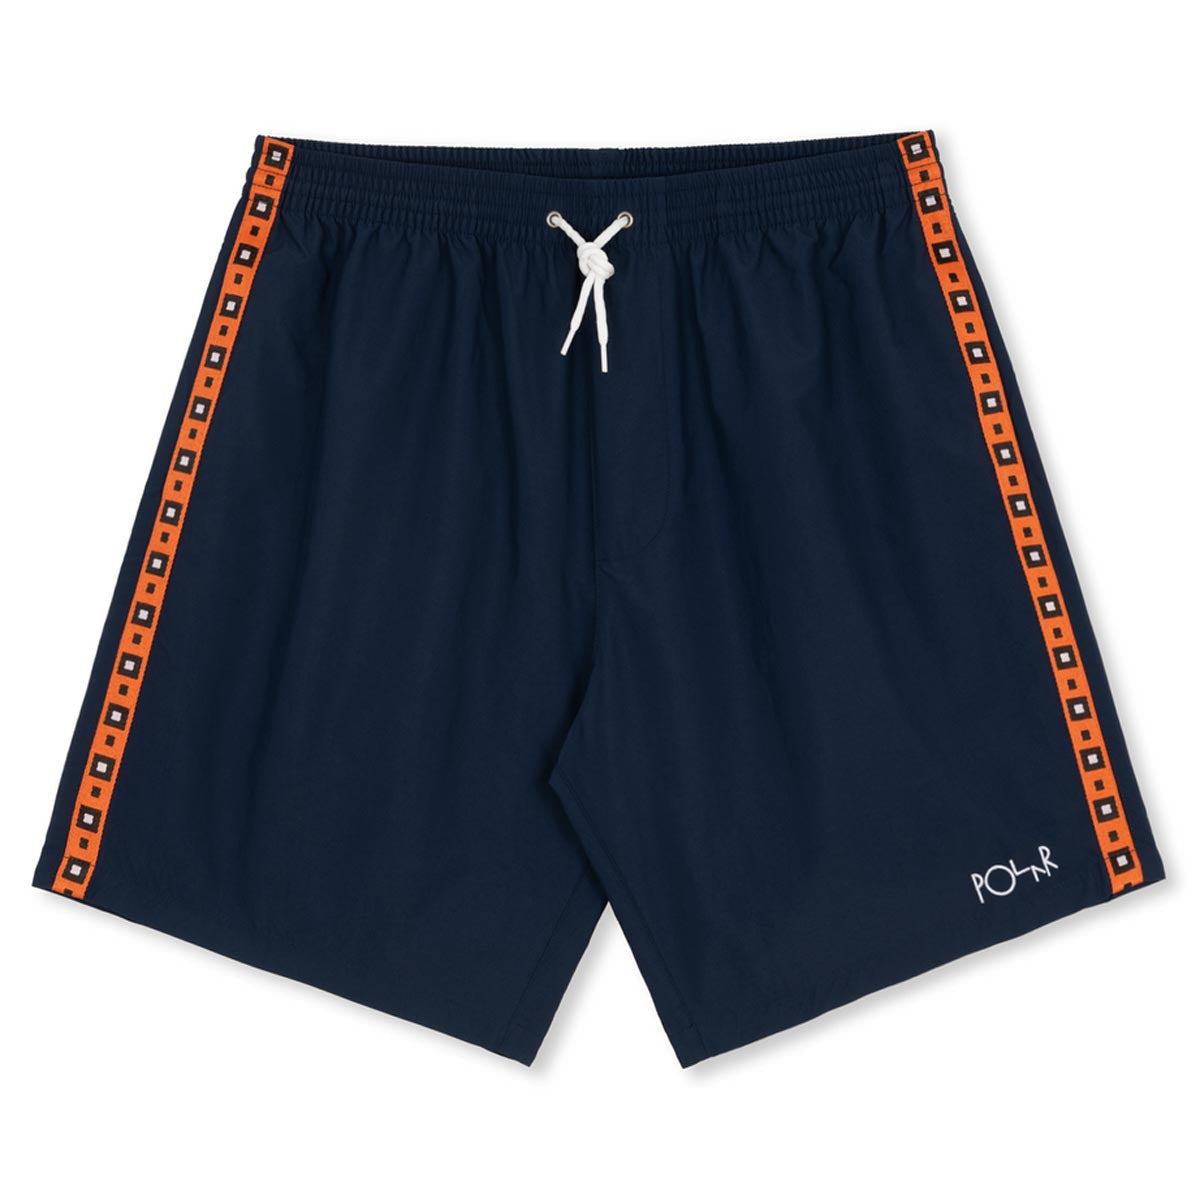 Polar Swim Square Stripe Shorts - Navy/Orange image 1